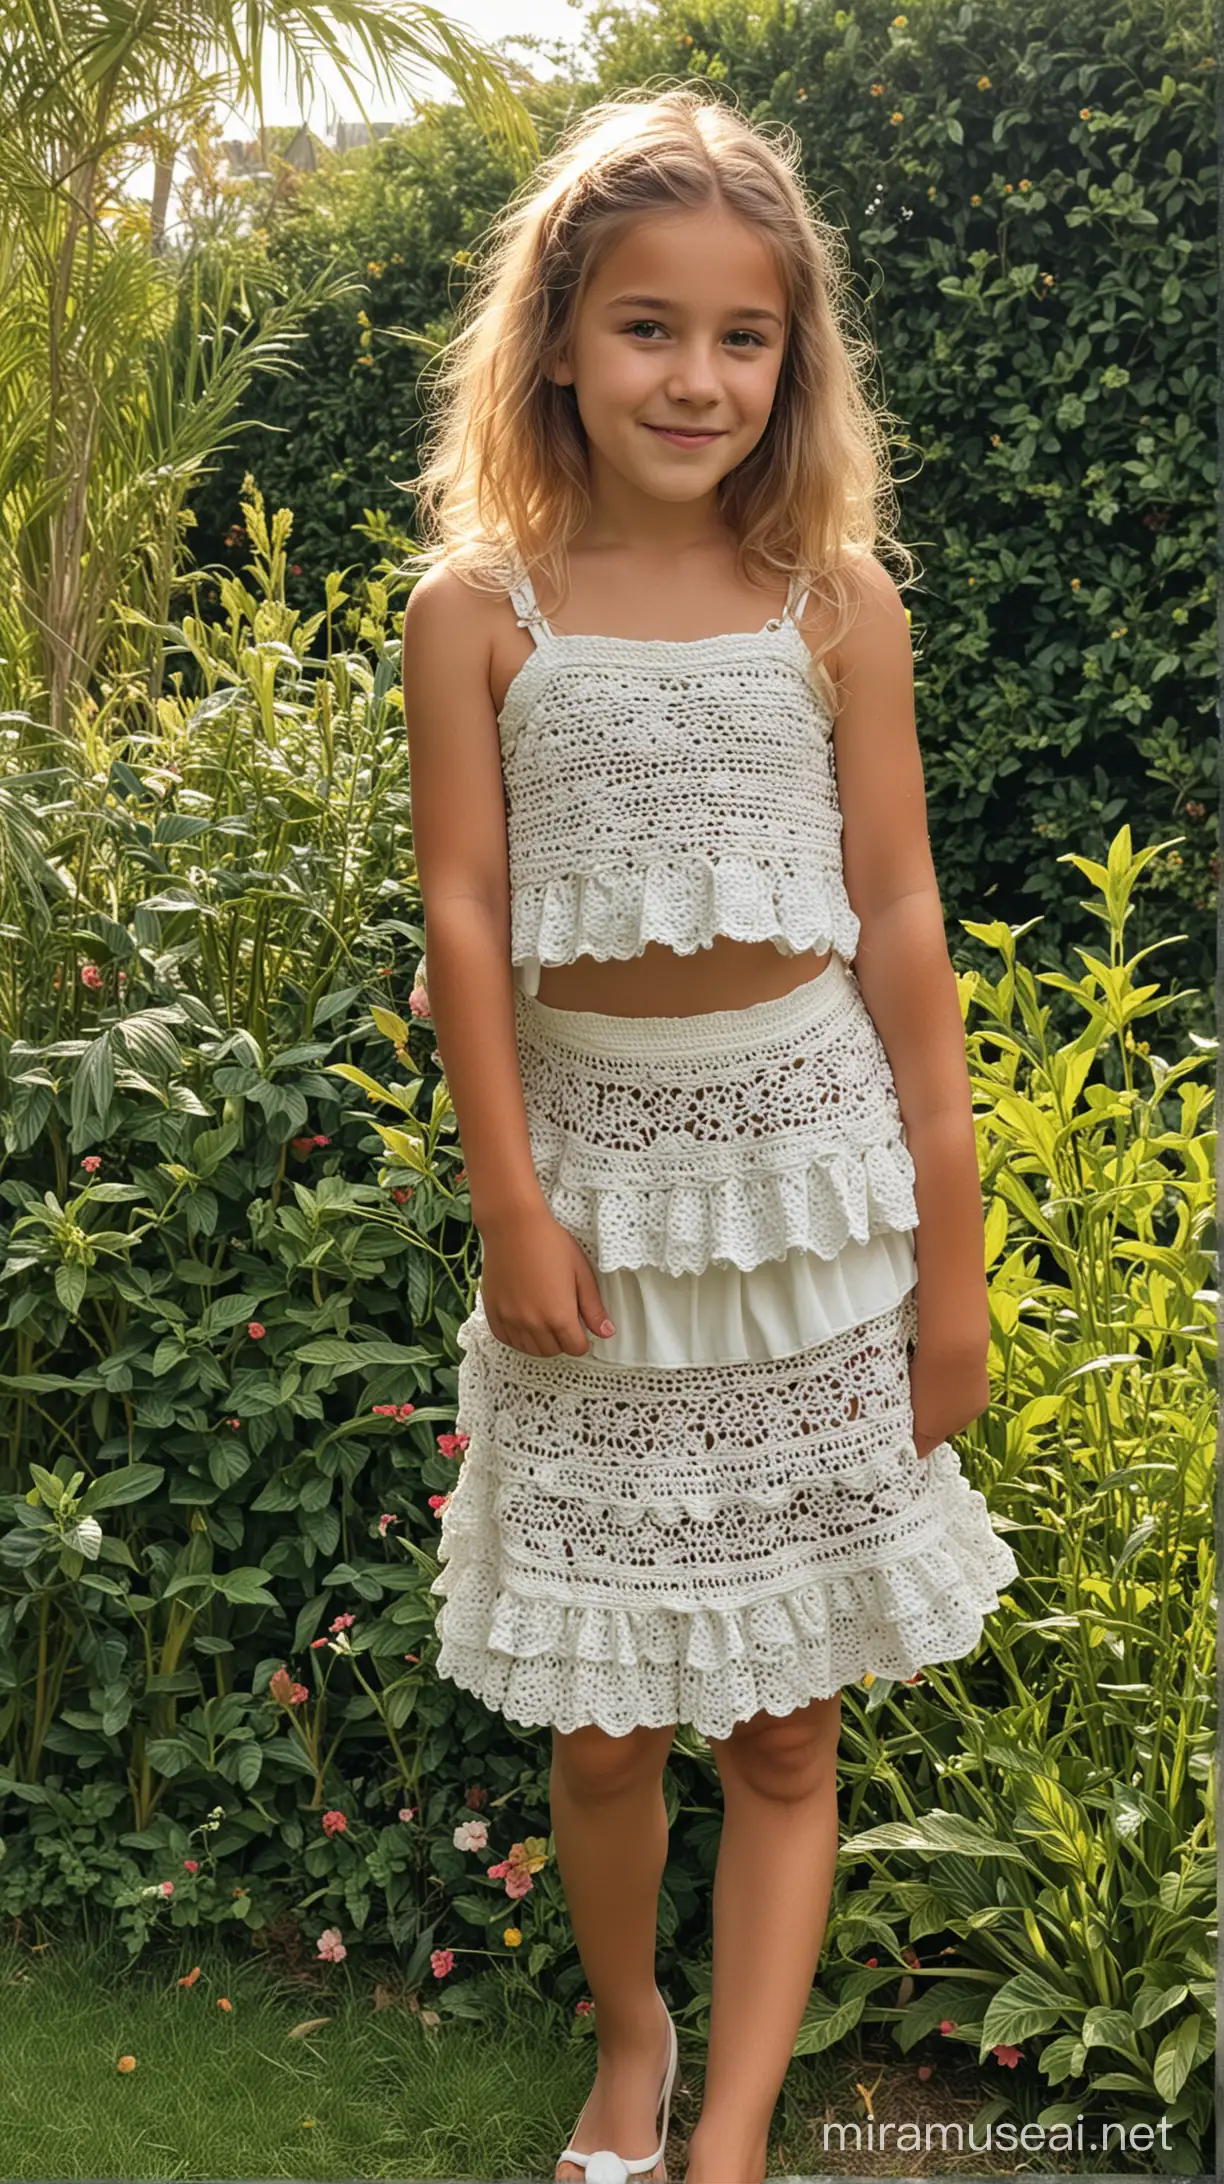 11 years old girl, wearing Crochet Crop Top with Tiered Mini Skirt, in garden